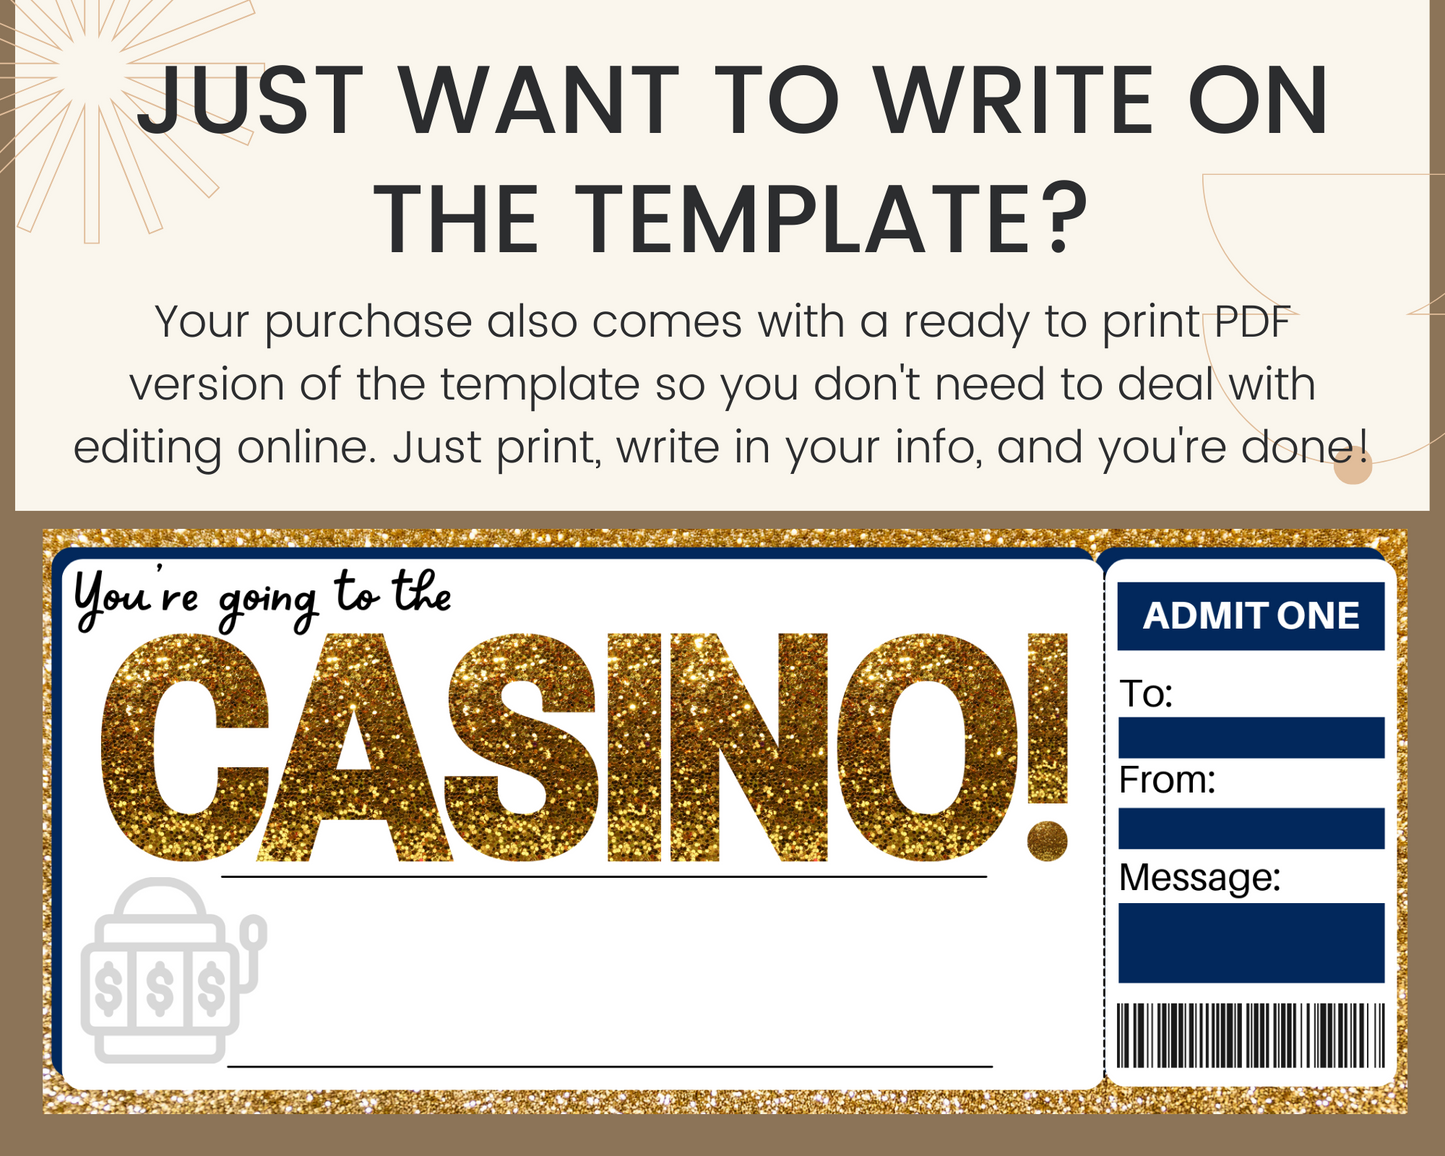 Casino Gift Certificate Template